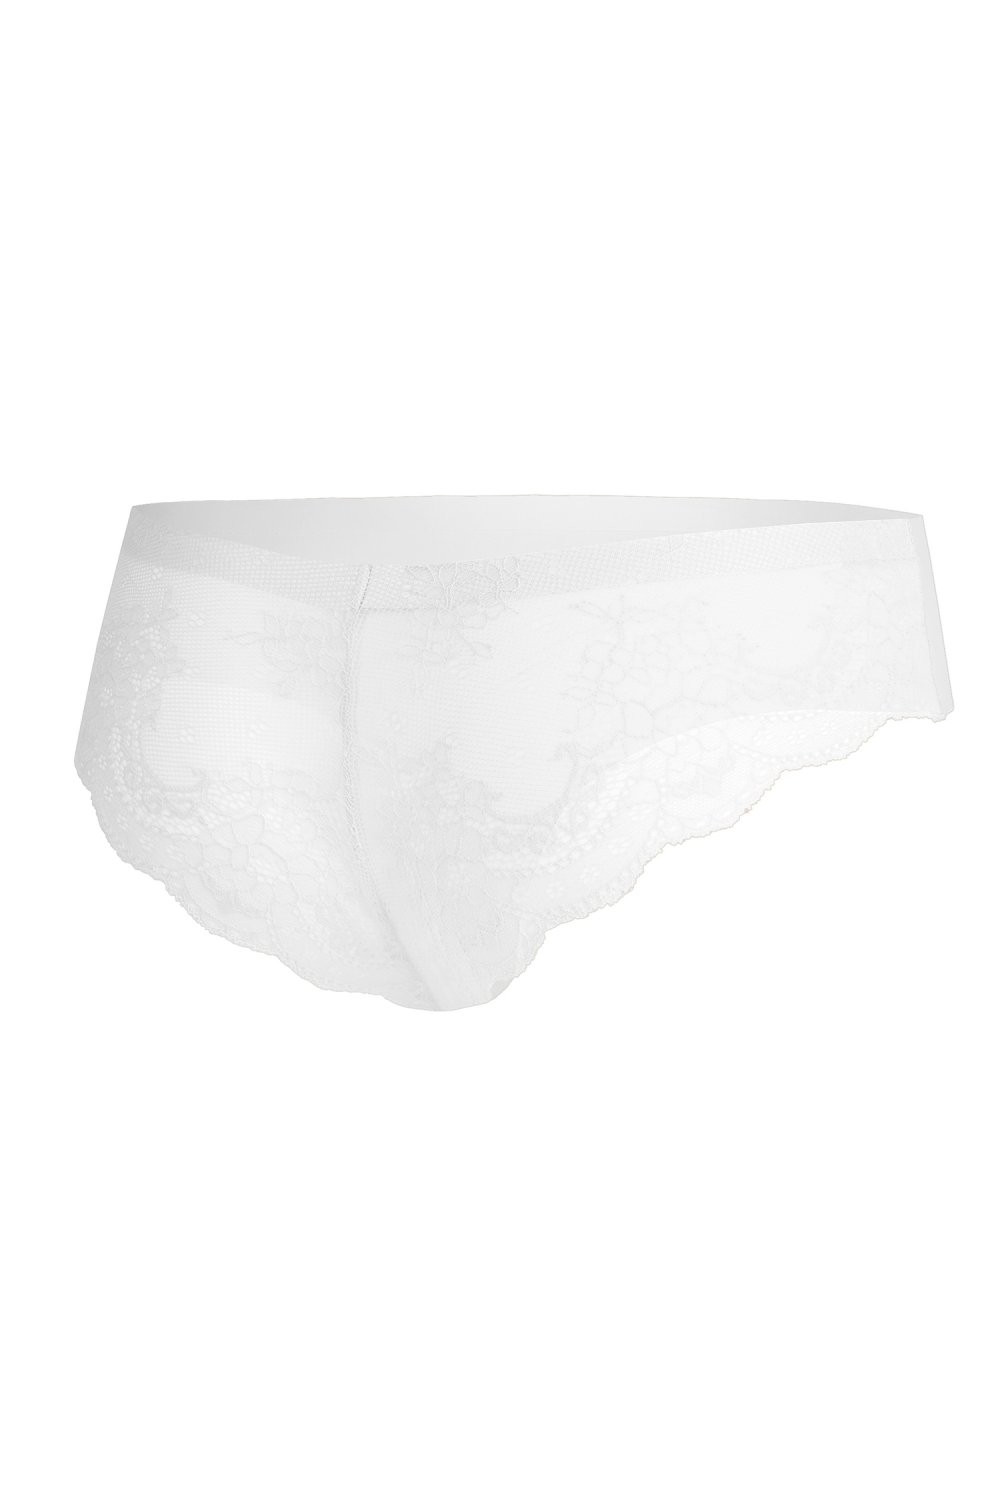 Dámské kalhotky Tanga white - JULIMEX Bílá L